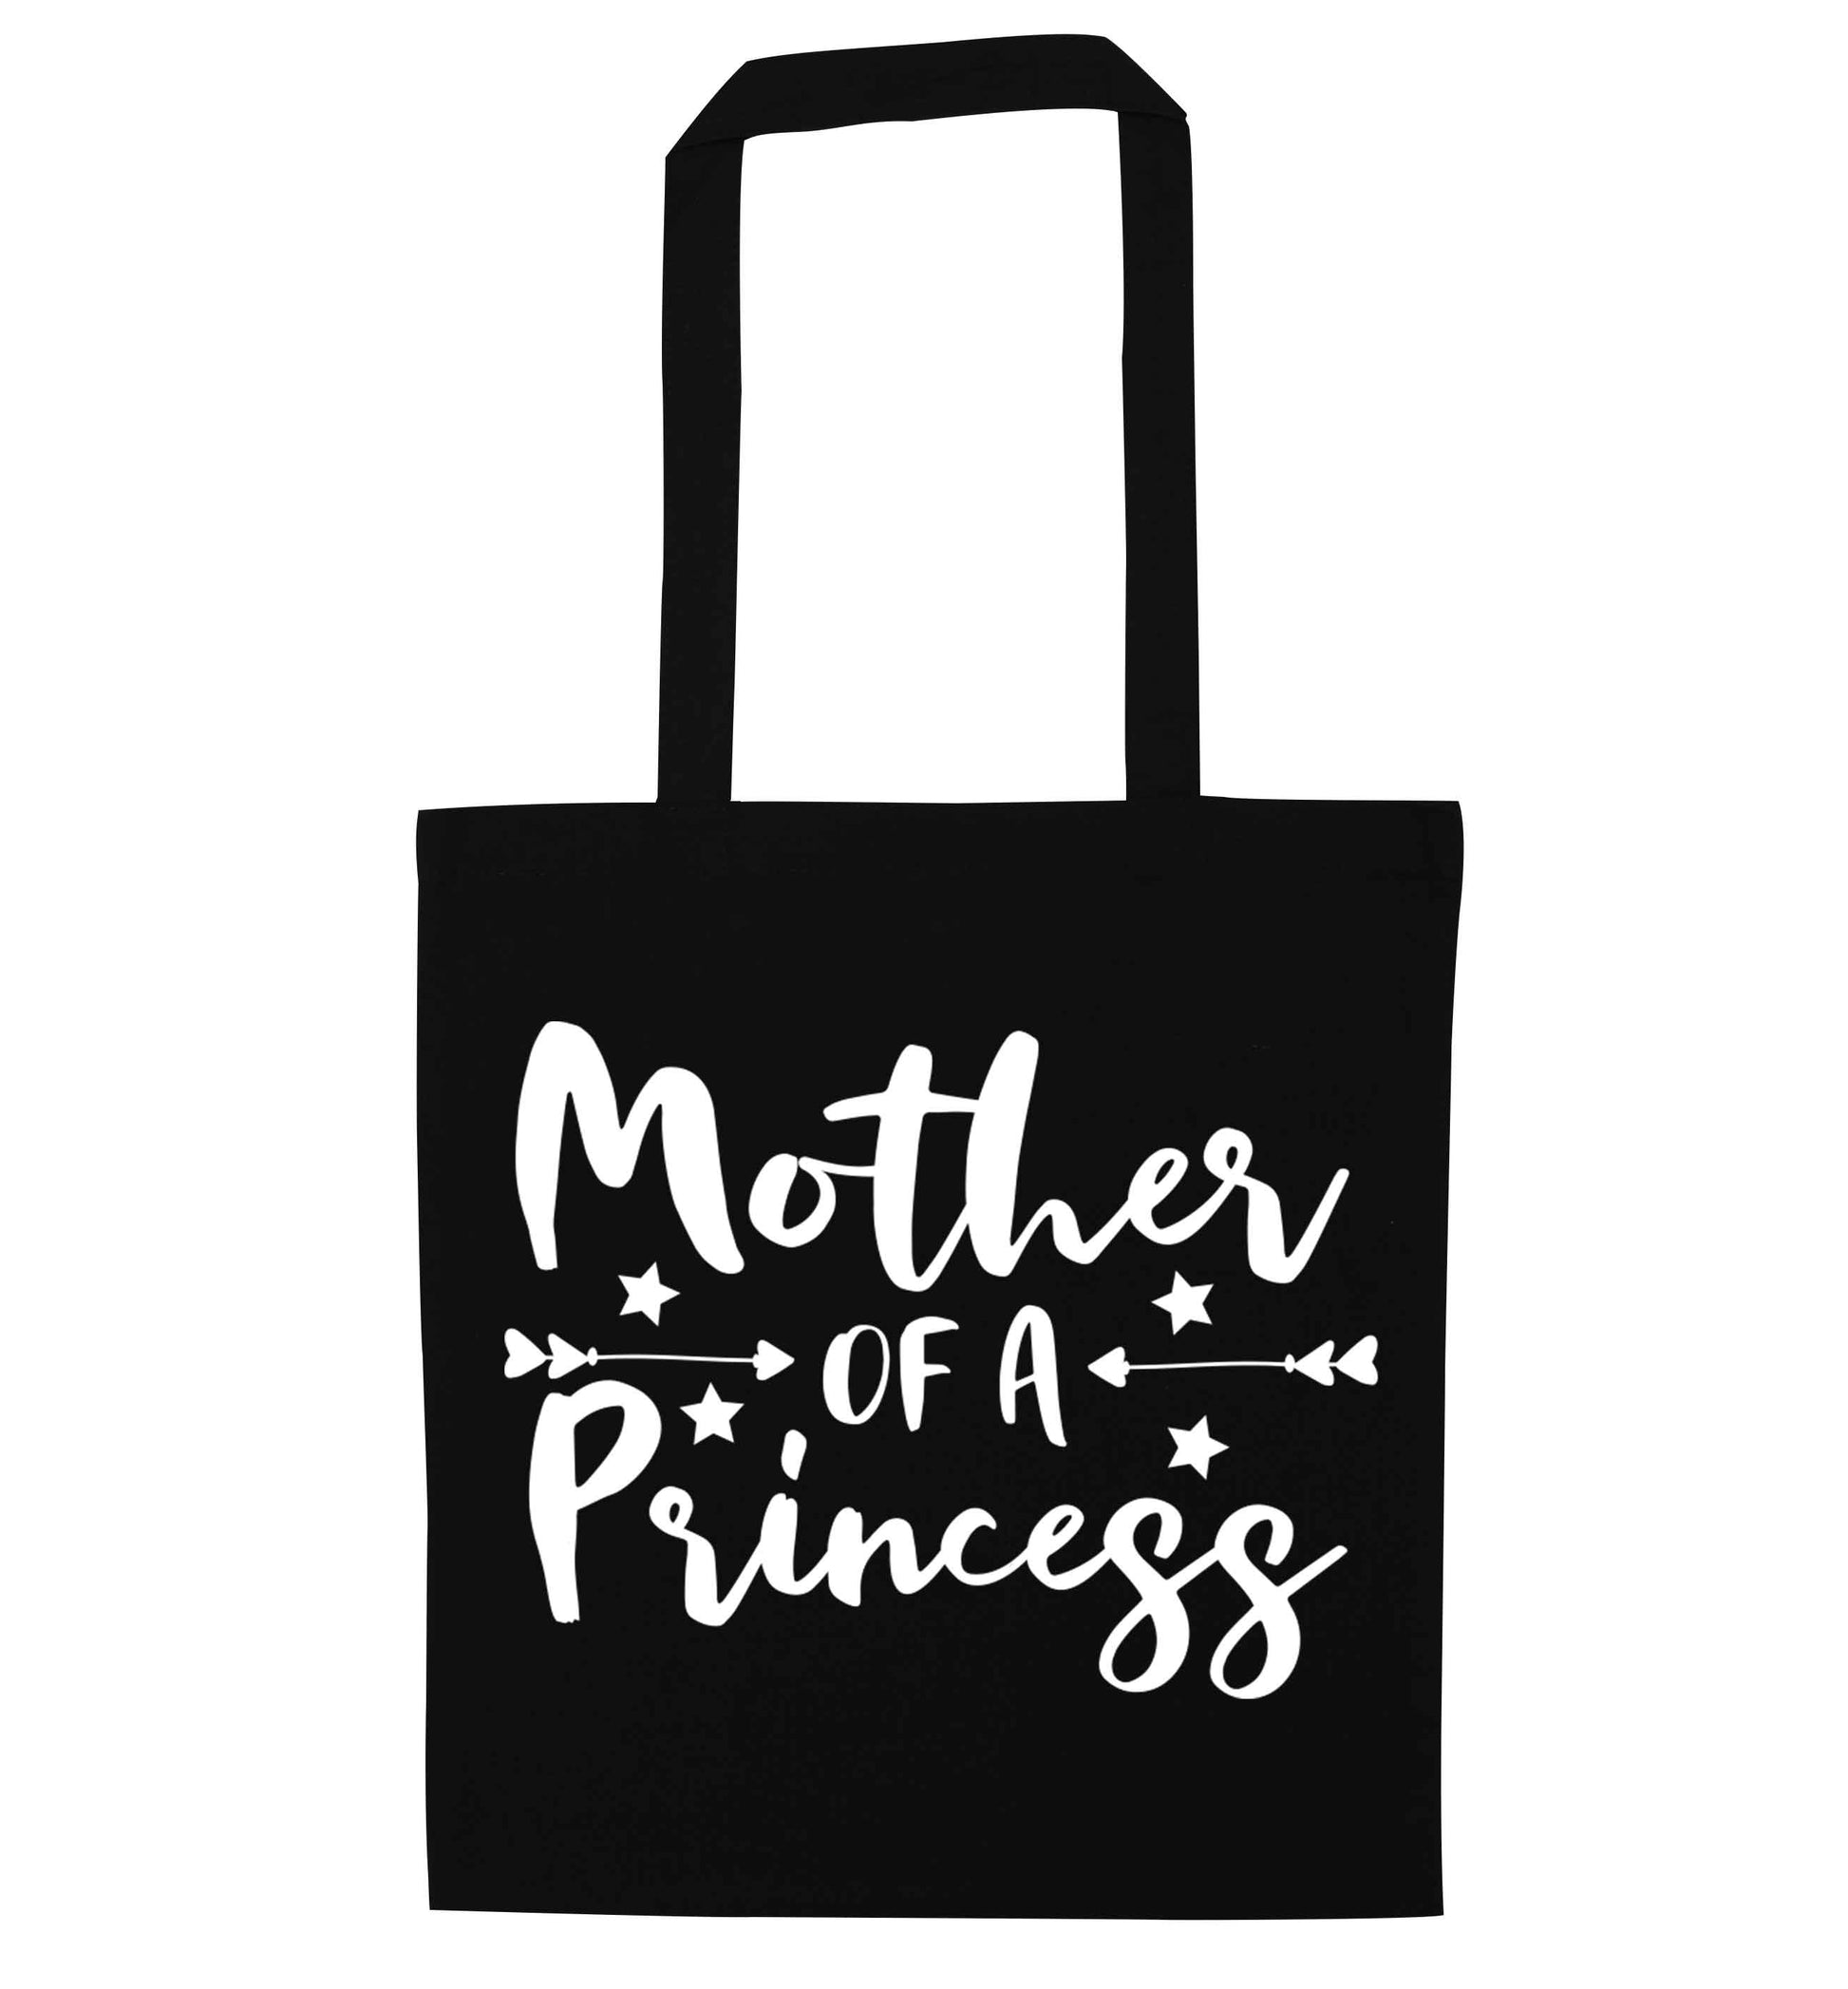 Mother of a princess black tote bag